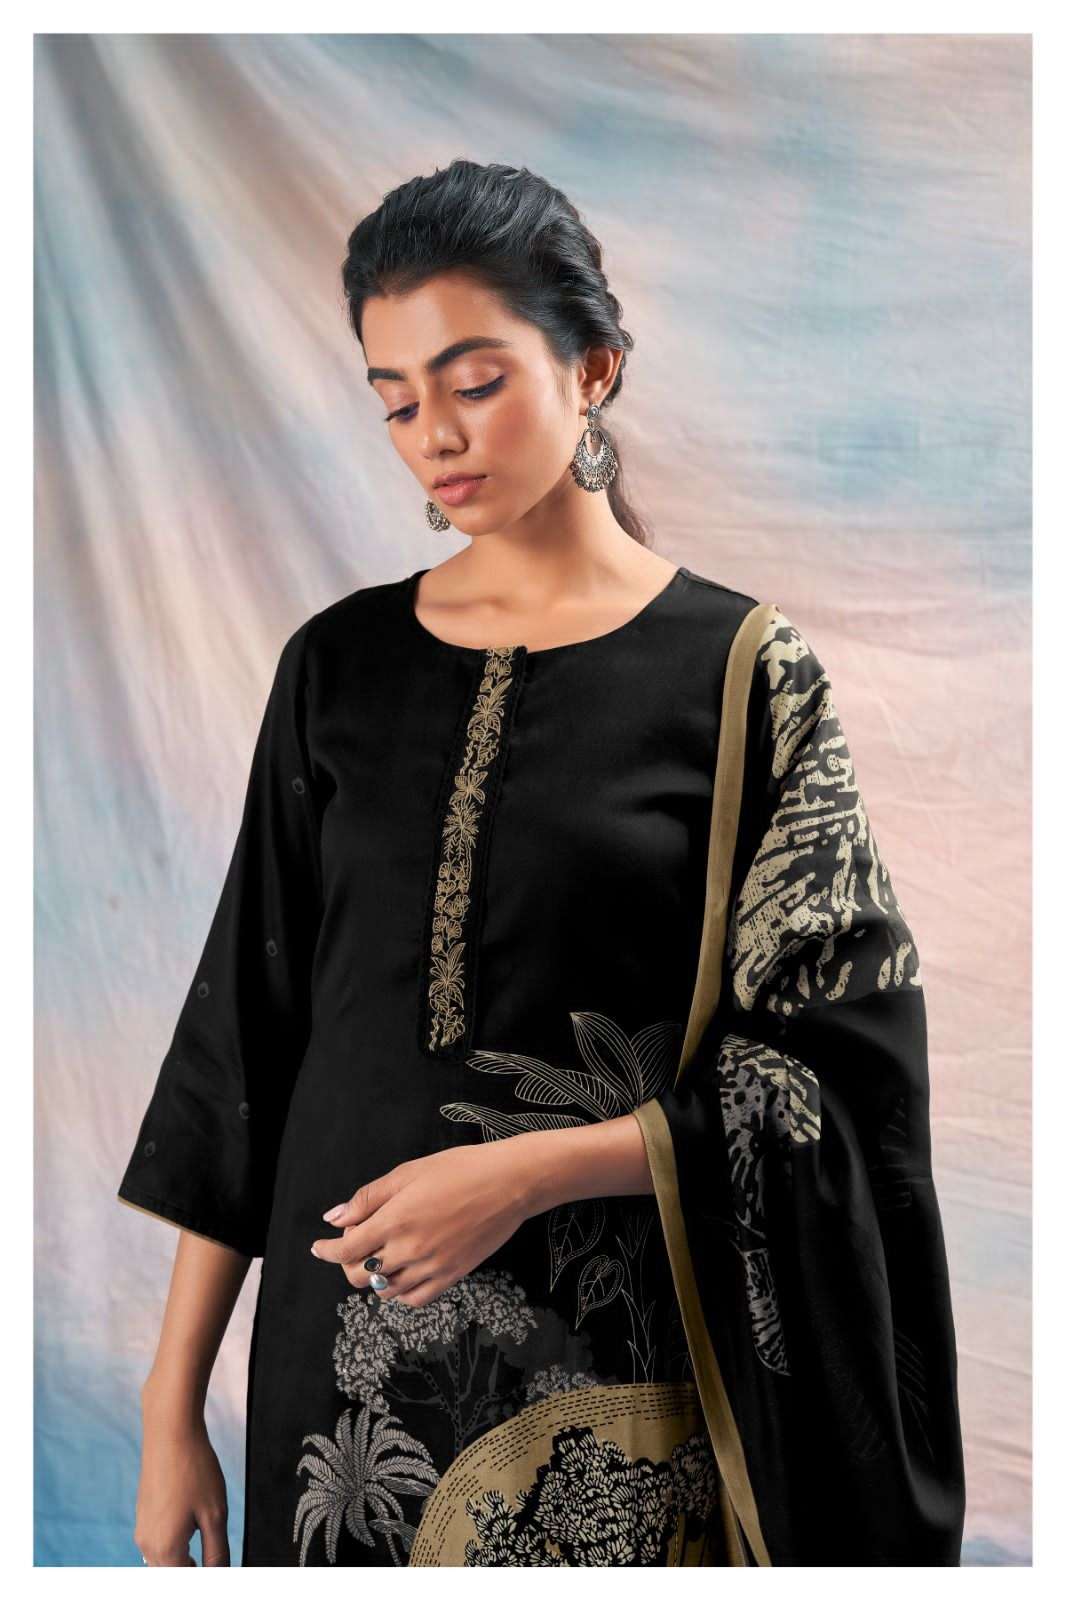 ganga janece 1830 series premium cotton designer salwar suits catalogue online supplier surat